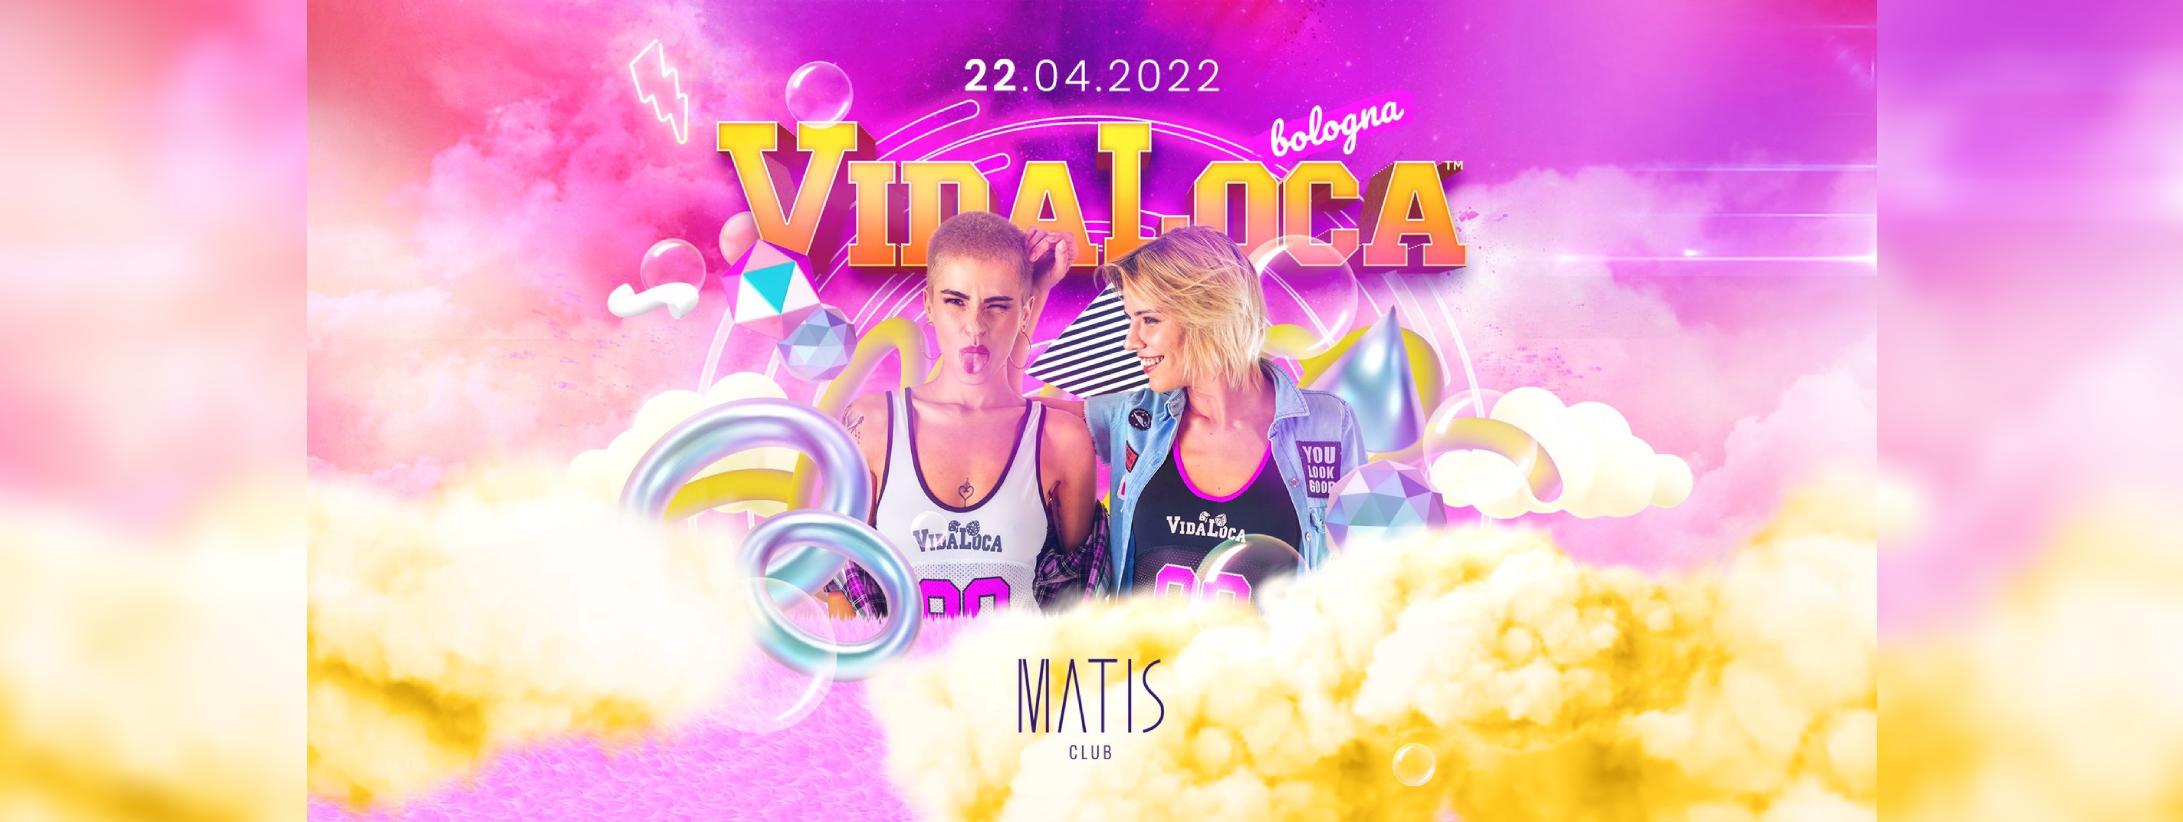 Vida loca Matis Club Bologna 22 aprile 2022